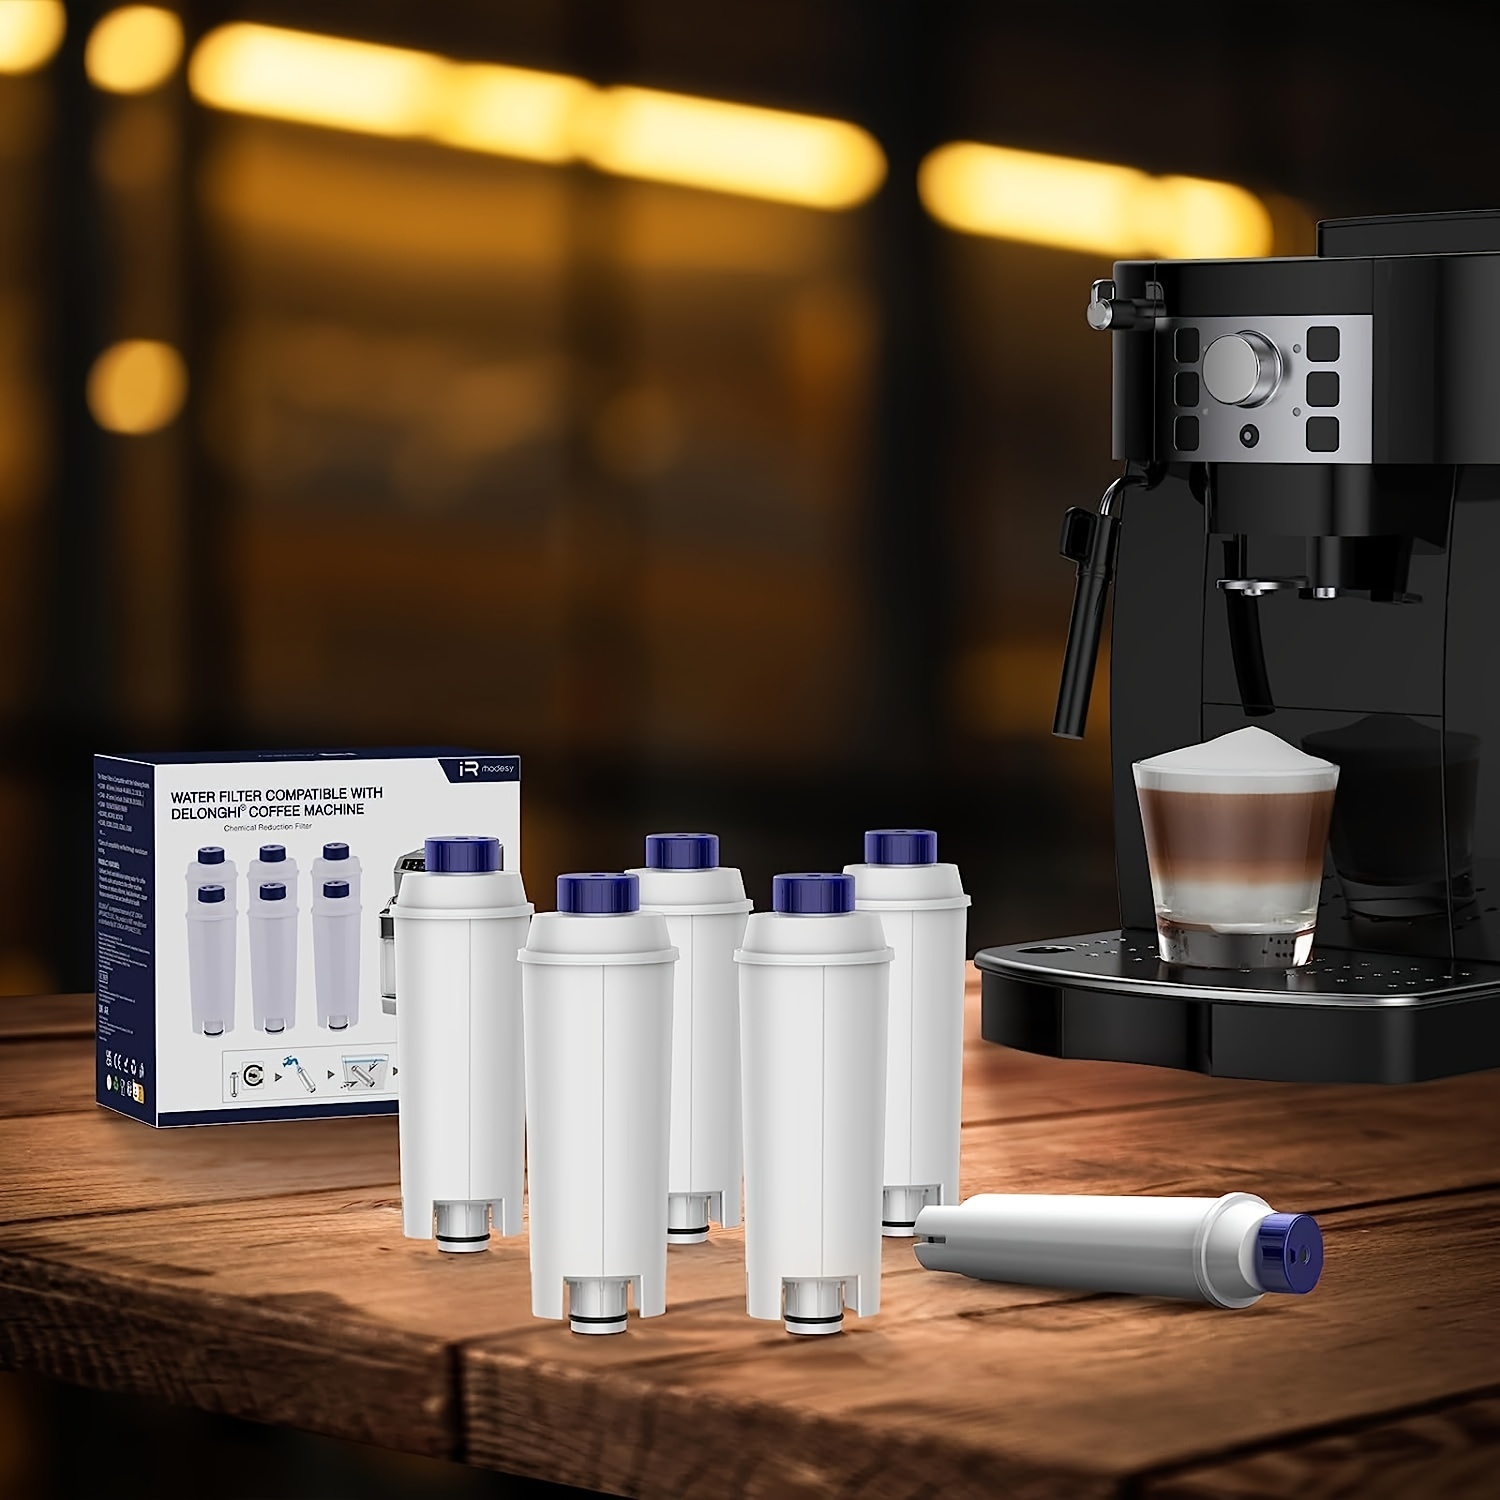 4Packs DLSC002 Coffee Water Filter for Delonghi Water Filter  Replacement,Compatible with ECAM, ESAM, ETAM, EC, EC680, EC800